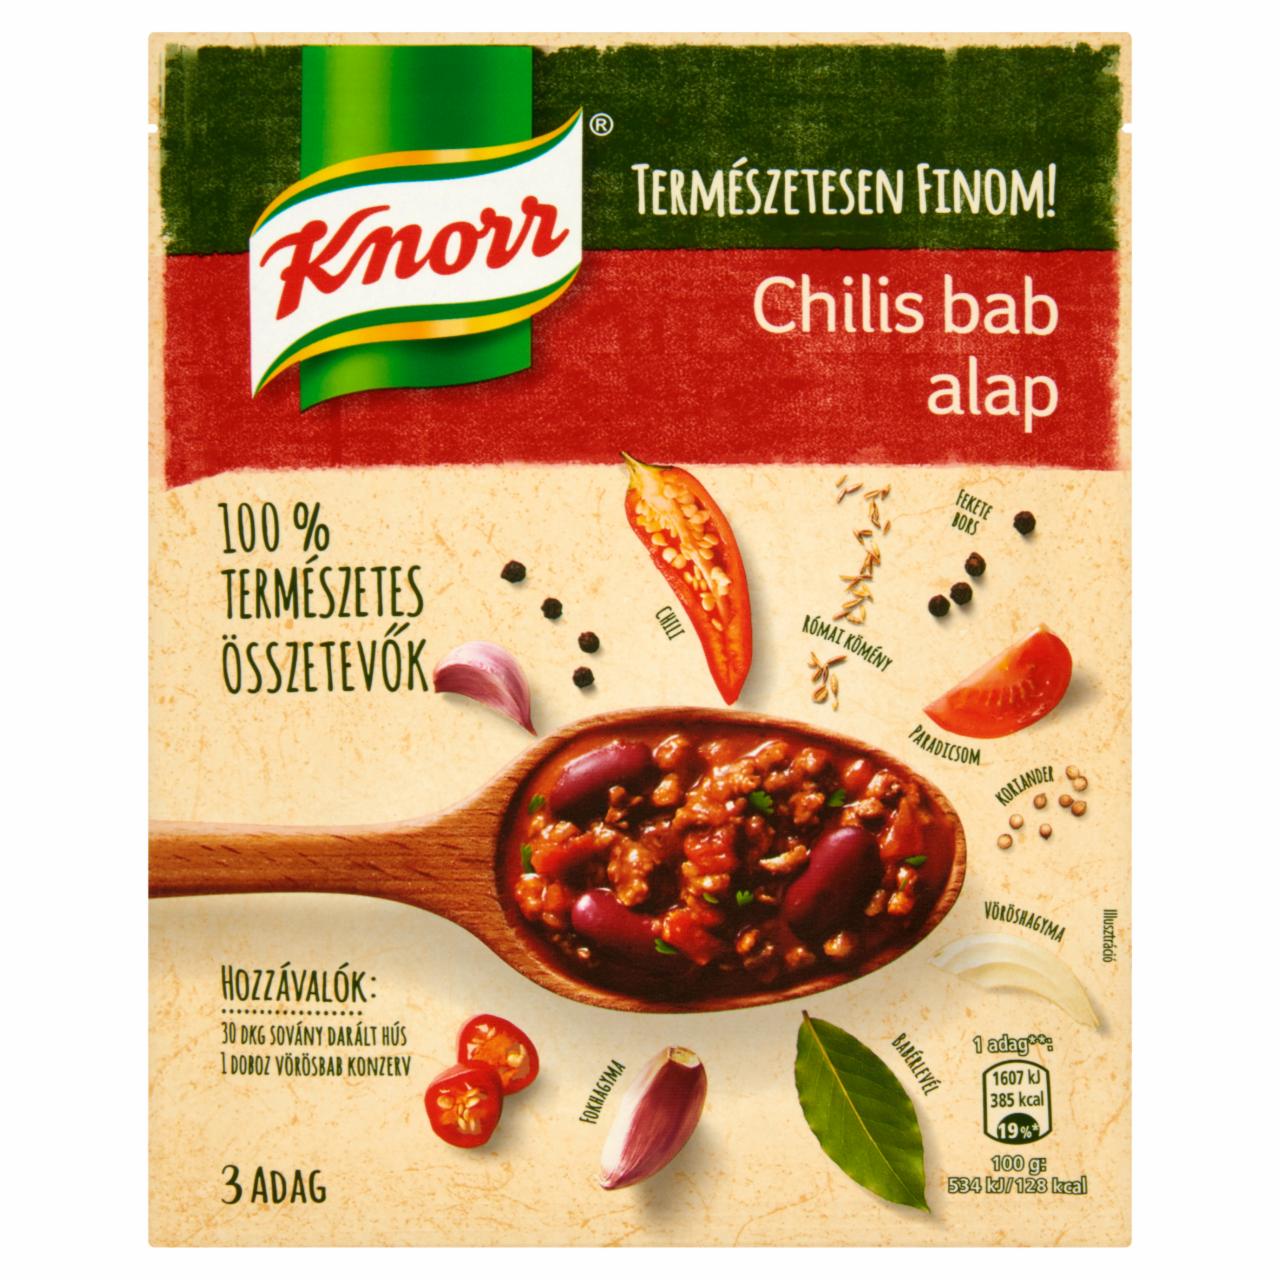 Képek - Knorr chilis bab alap 64 g